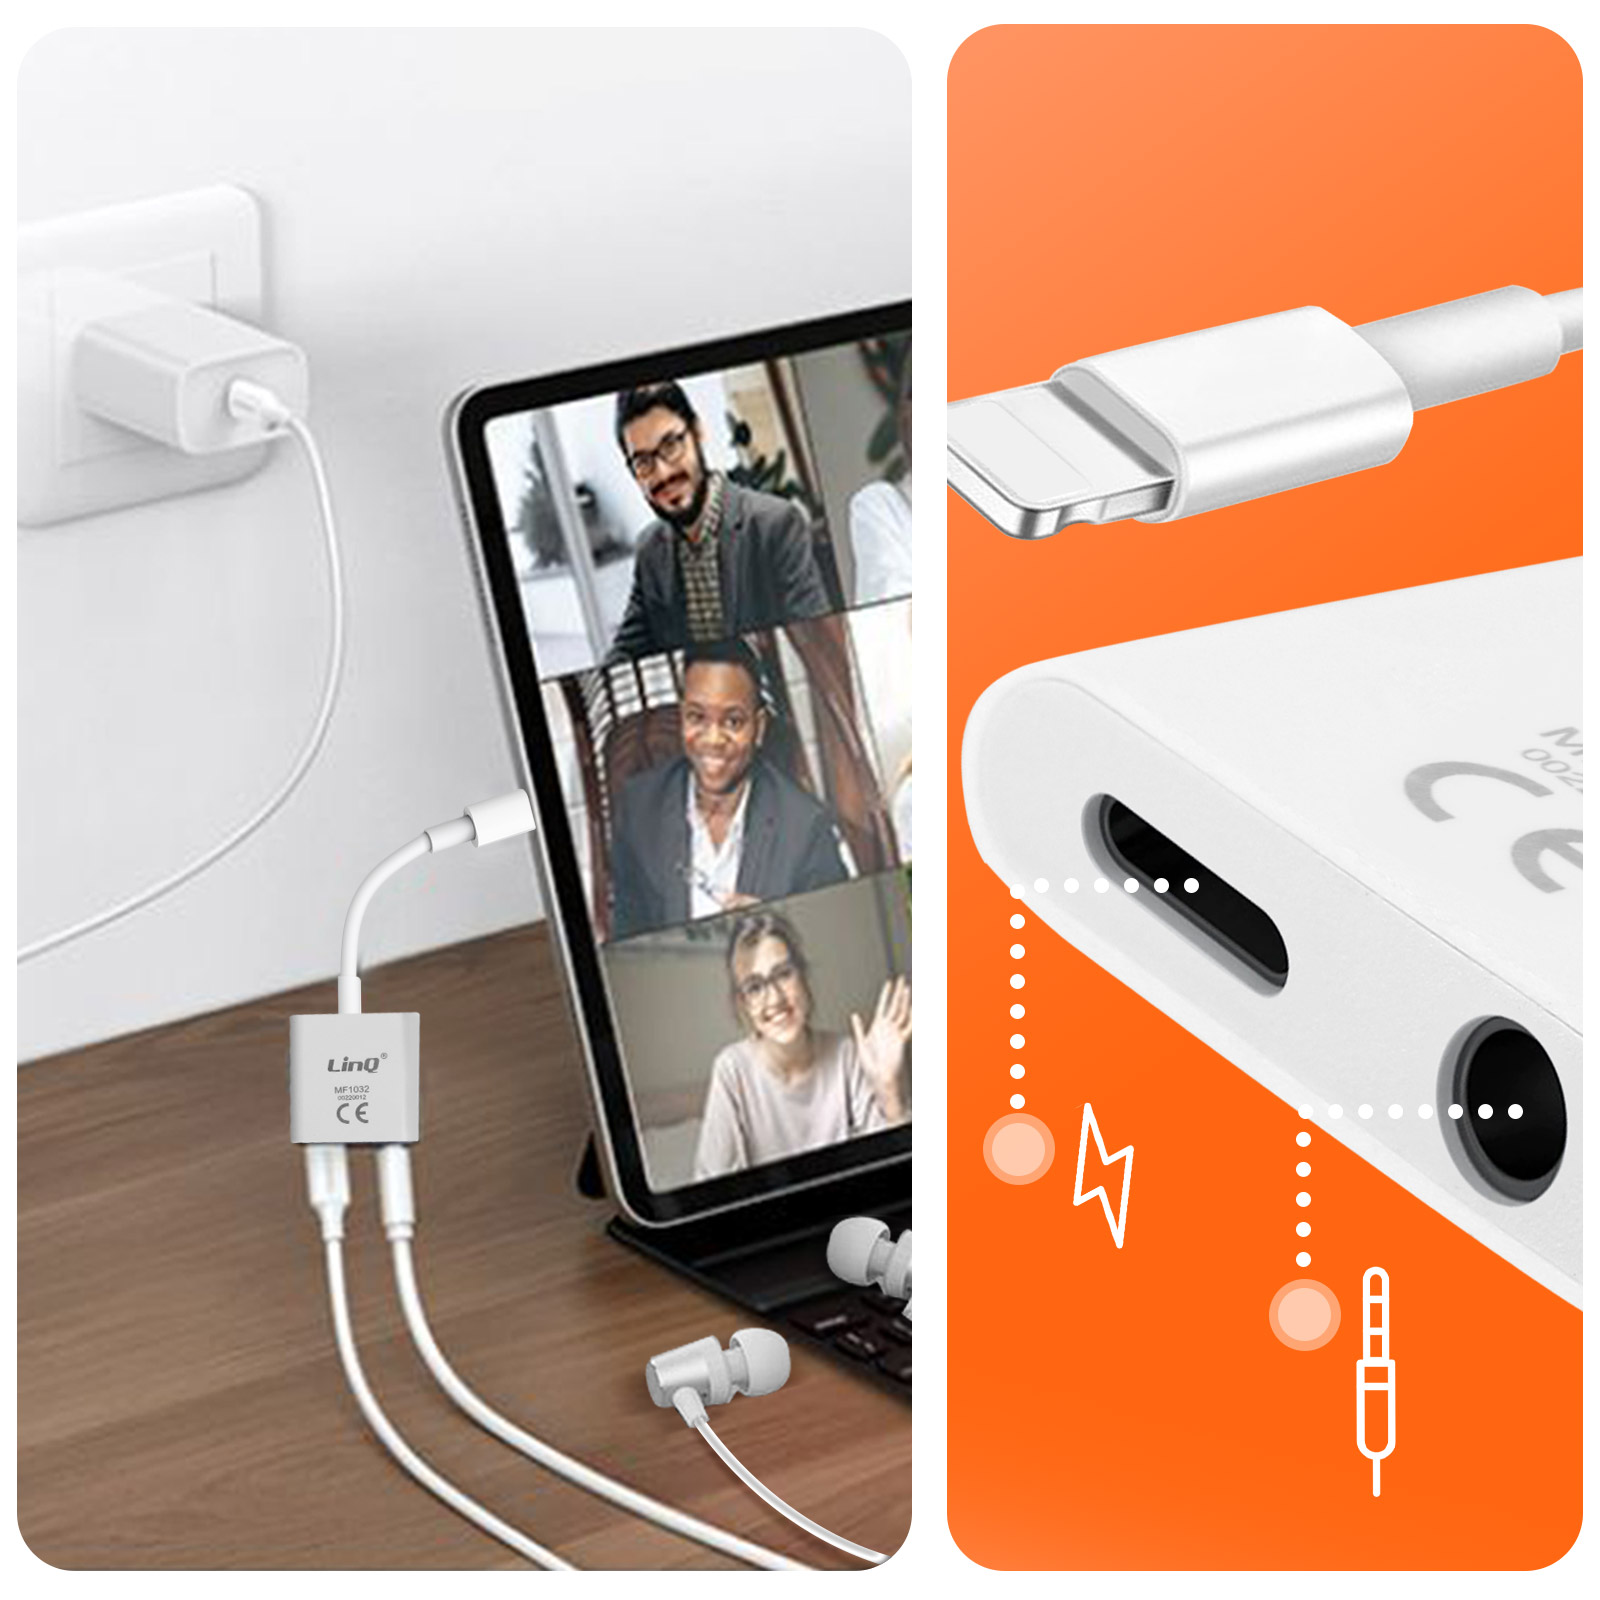 Adaptateur Audio et Charge iPhone vers Jack 3.5mm Lightning